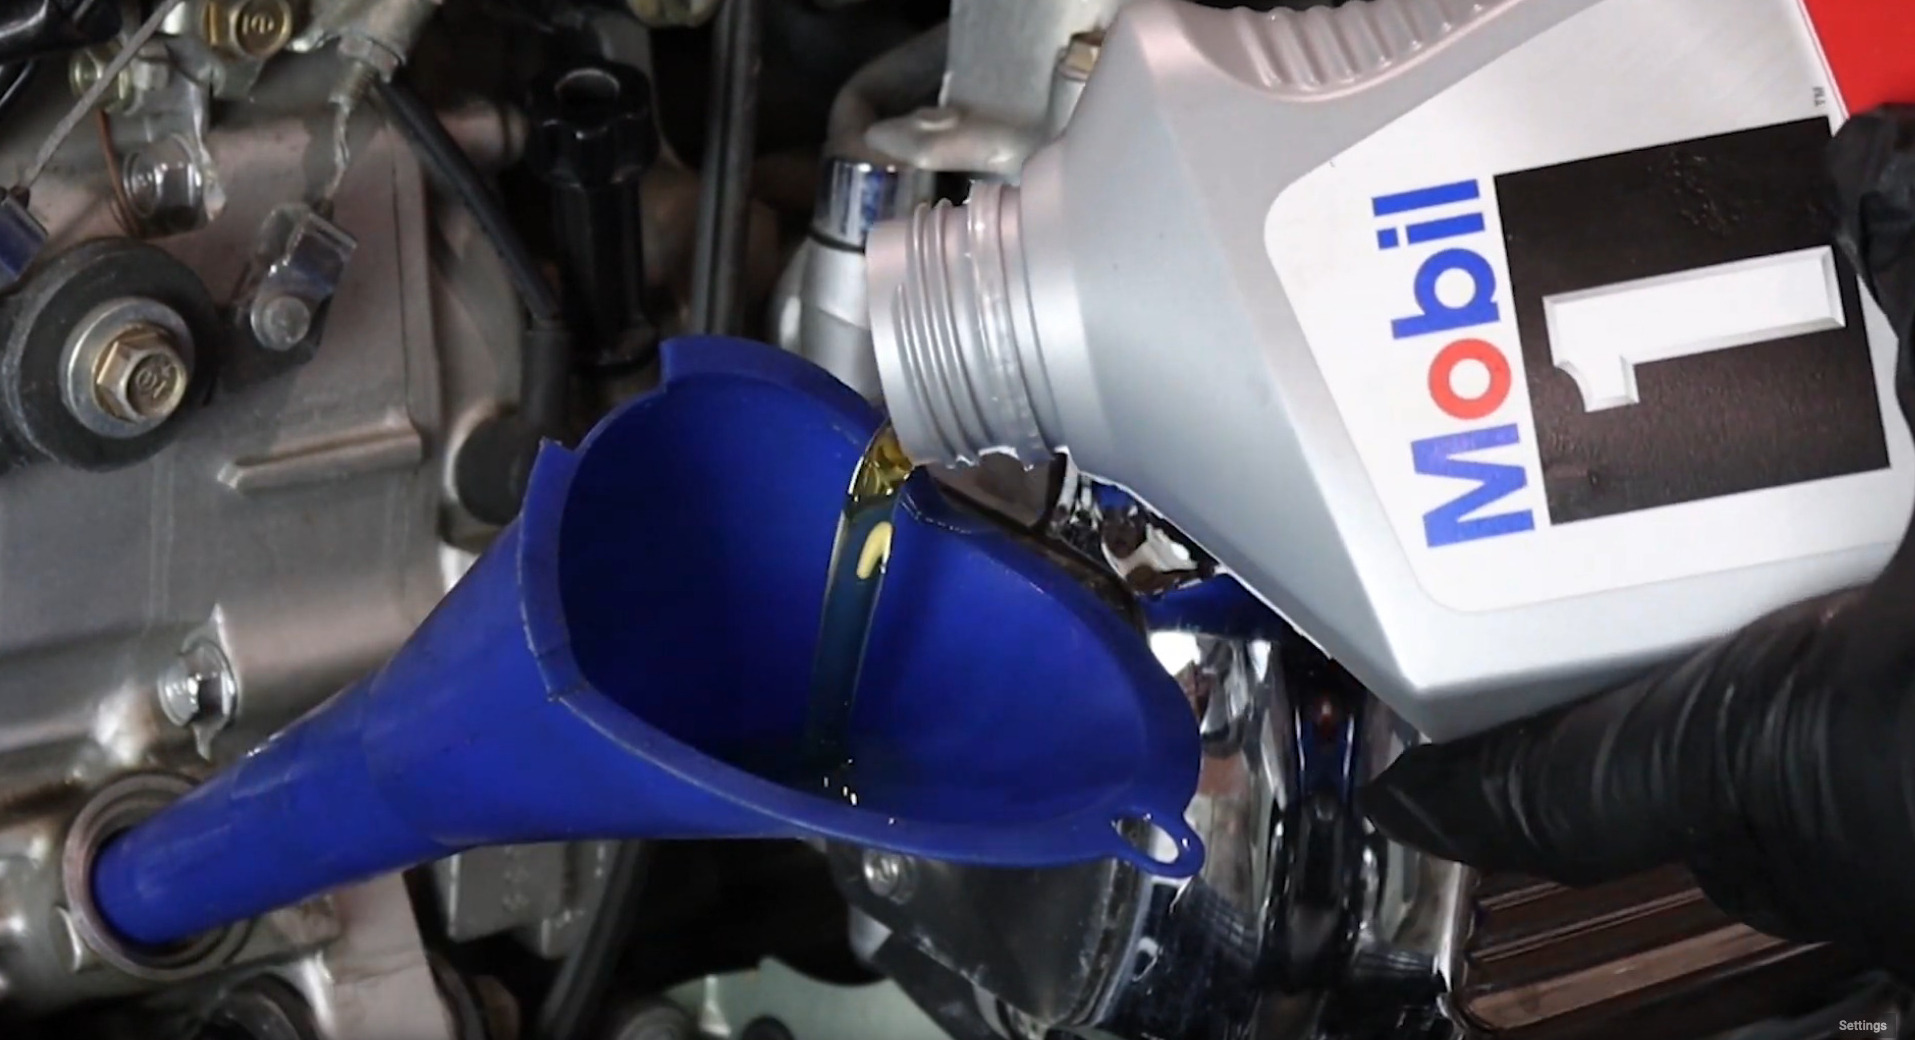 Honda Goldwing motorcycle oil change service